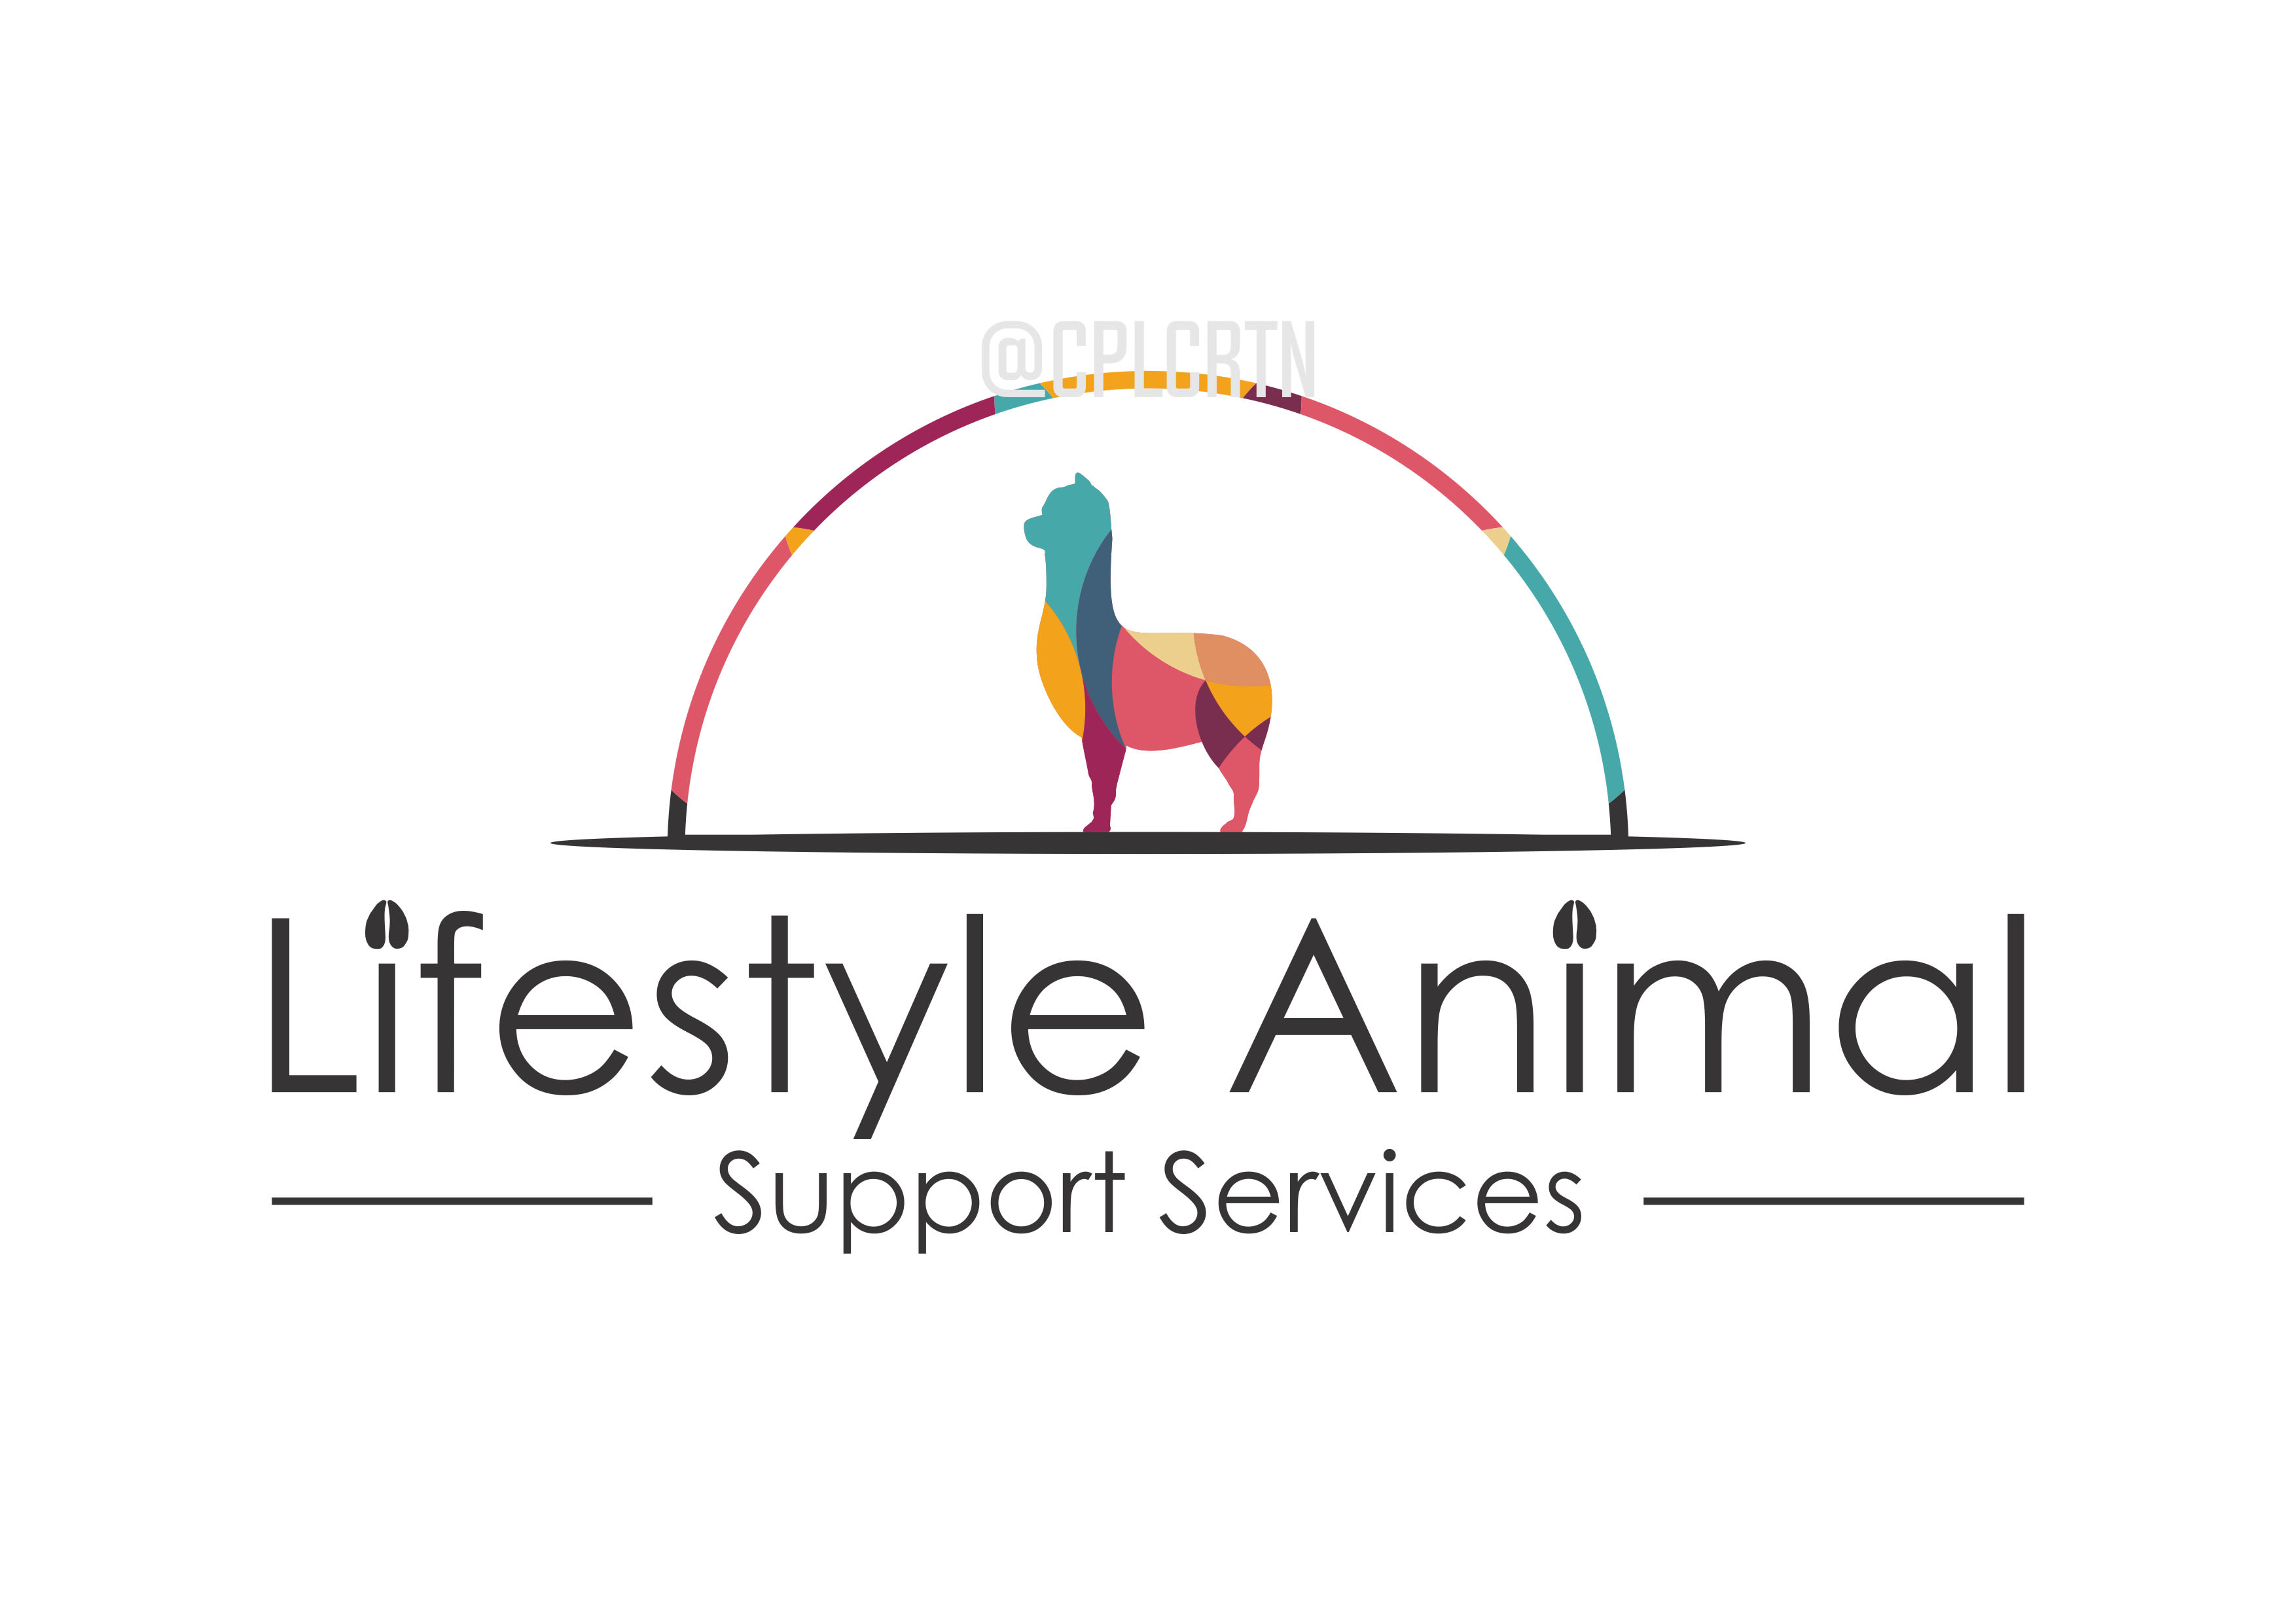 Design geometric playful animal logo by Cplcrtn | Fiverr